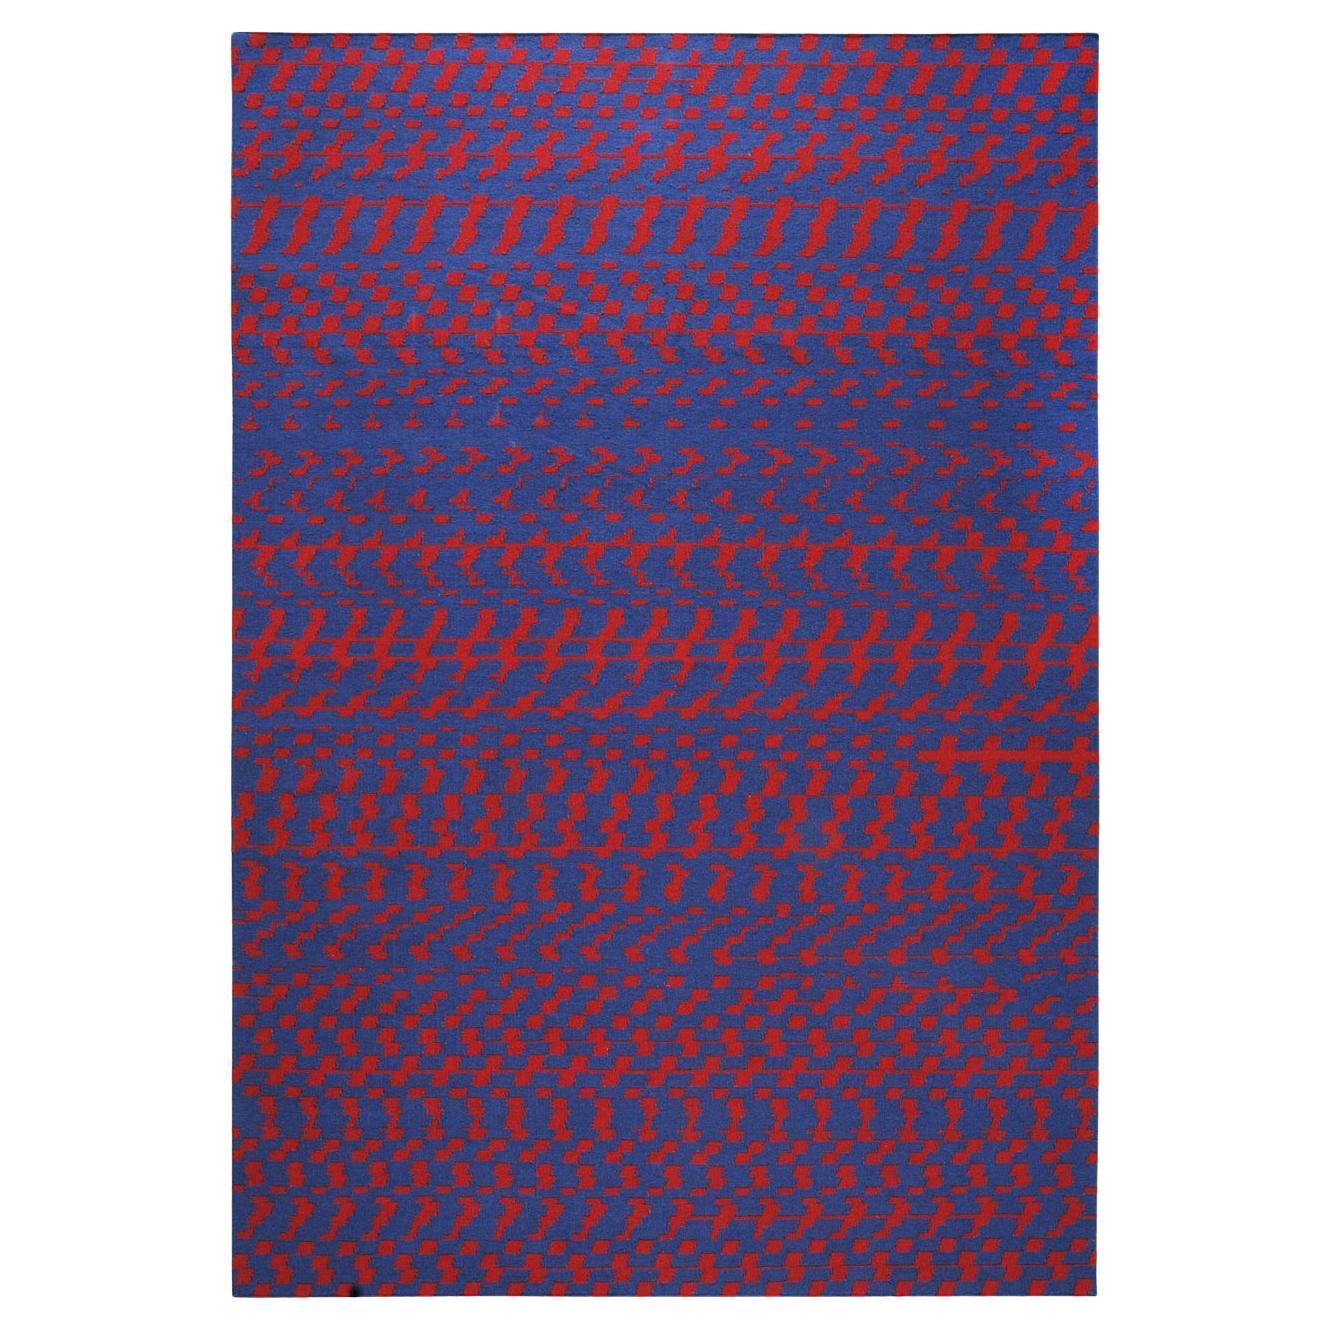 Fuoritempo - Red Blue - Design Kilim Rug Paolo Giordano Wool Carpet Cotton For Sale